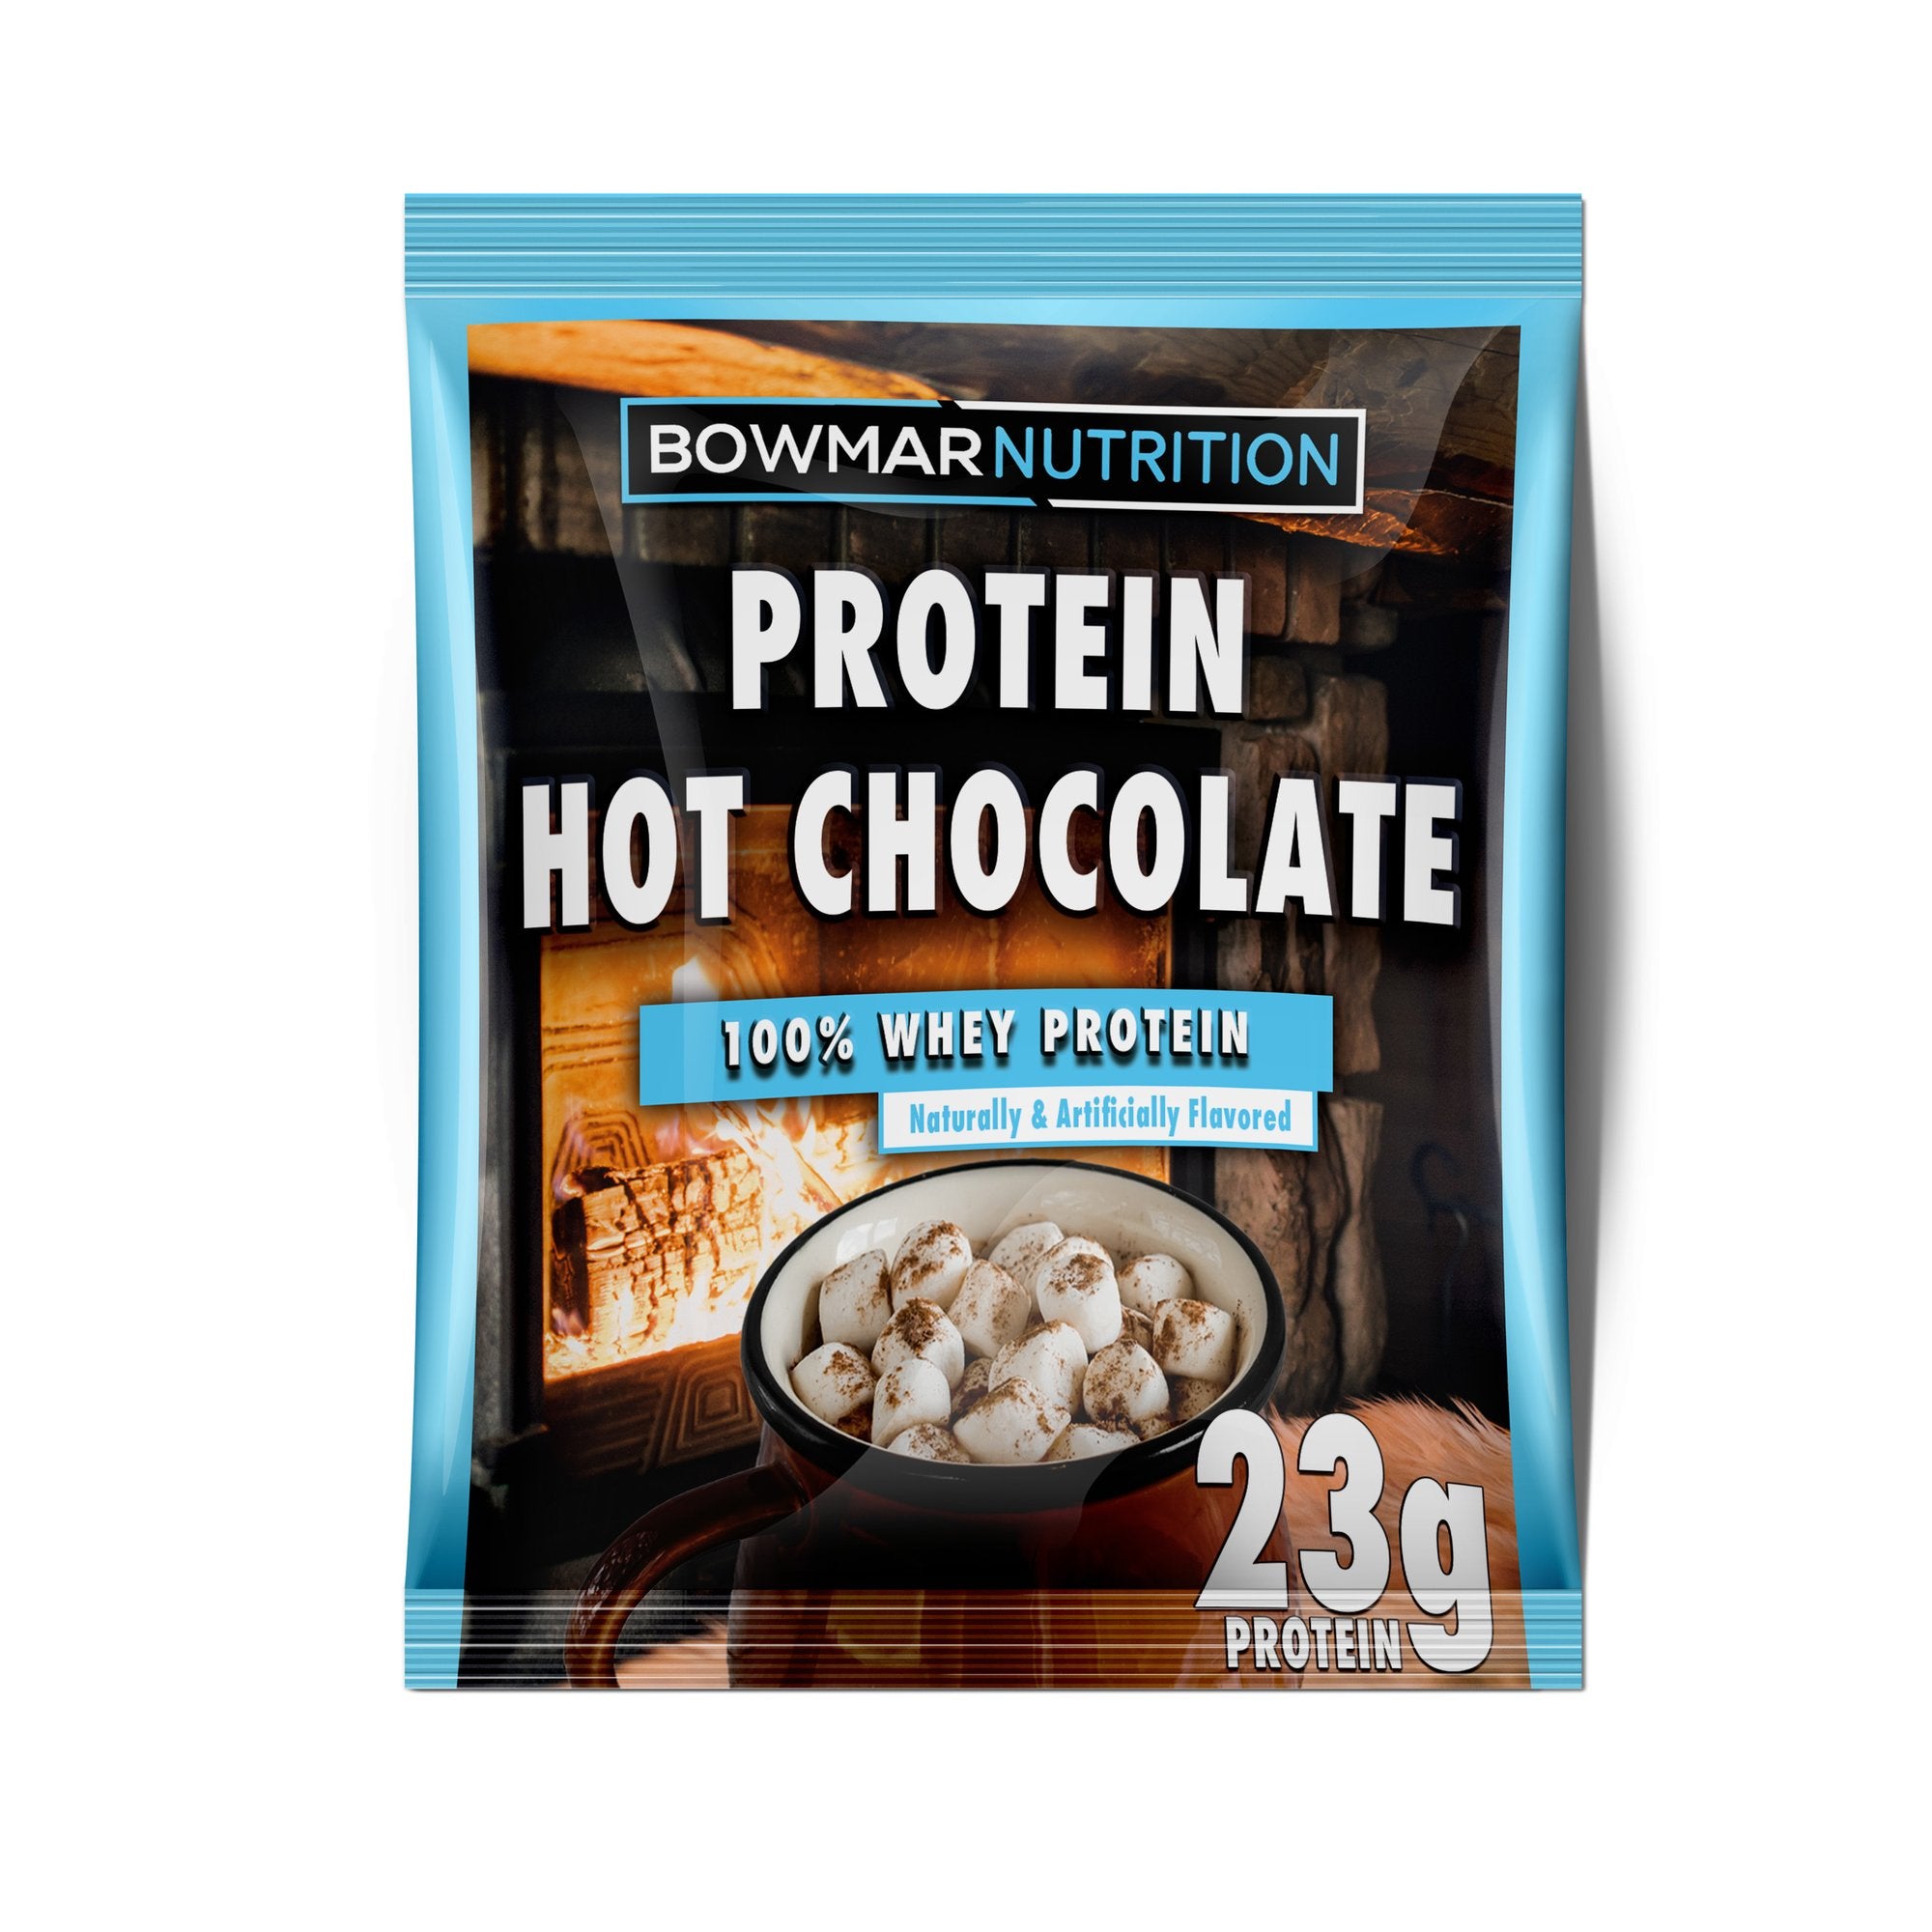 Bowmar Whey Protein Powder Sample (1 serving) Protein Snacks Hot Chocolate bowmar bowmar-protein-powder-sachet-1-packet